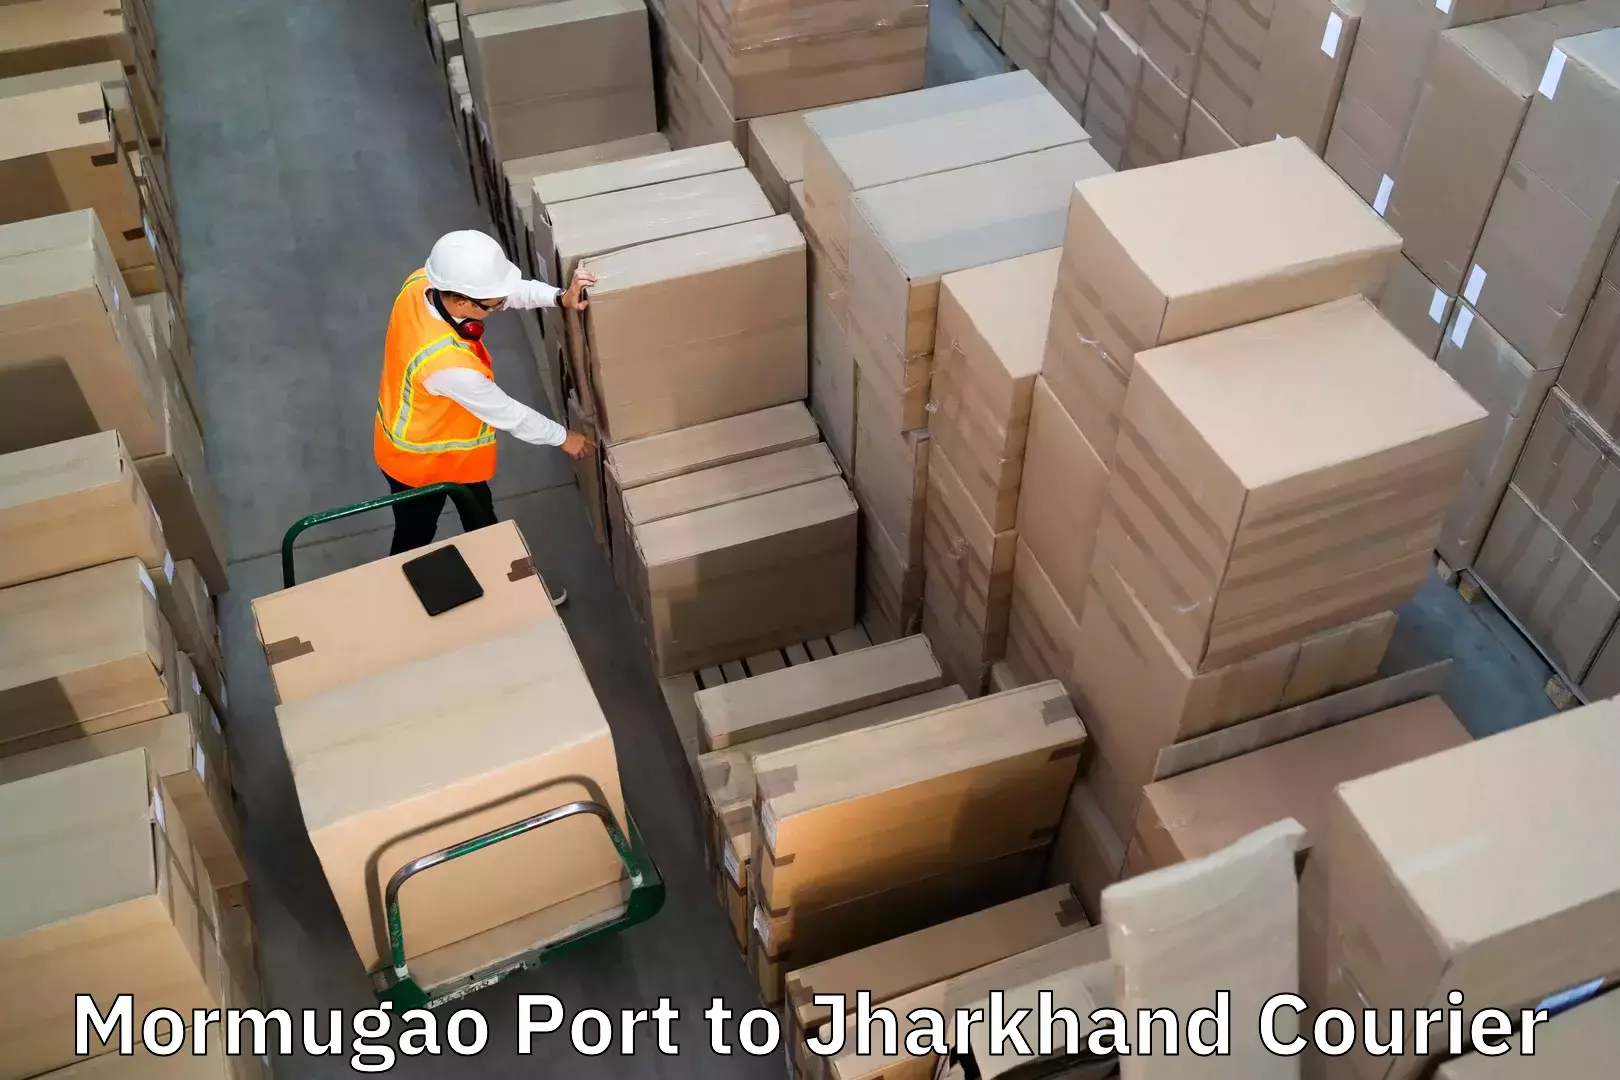 Baggage transport network Mormugao Port to Topchanchi